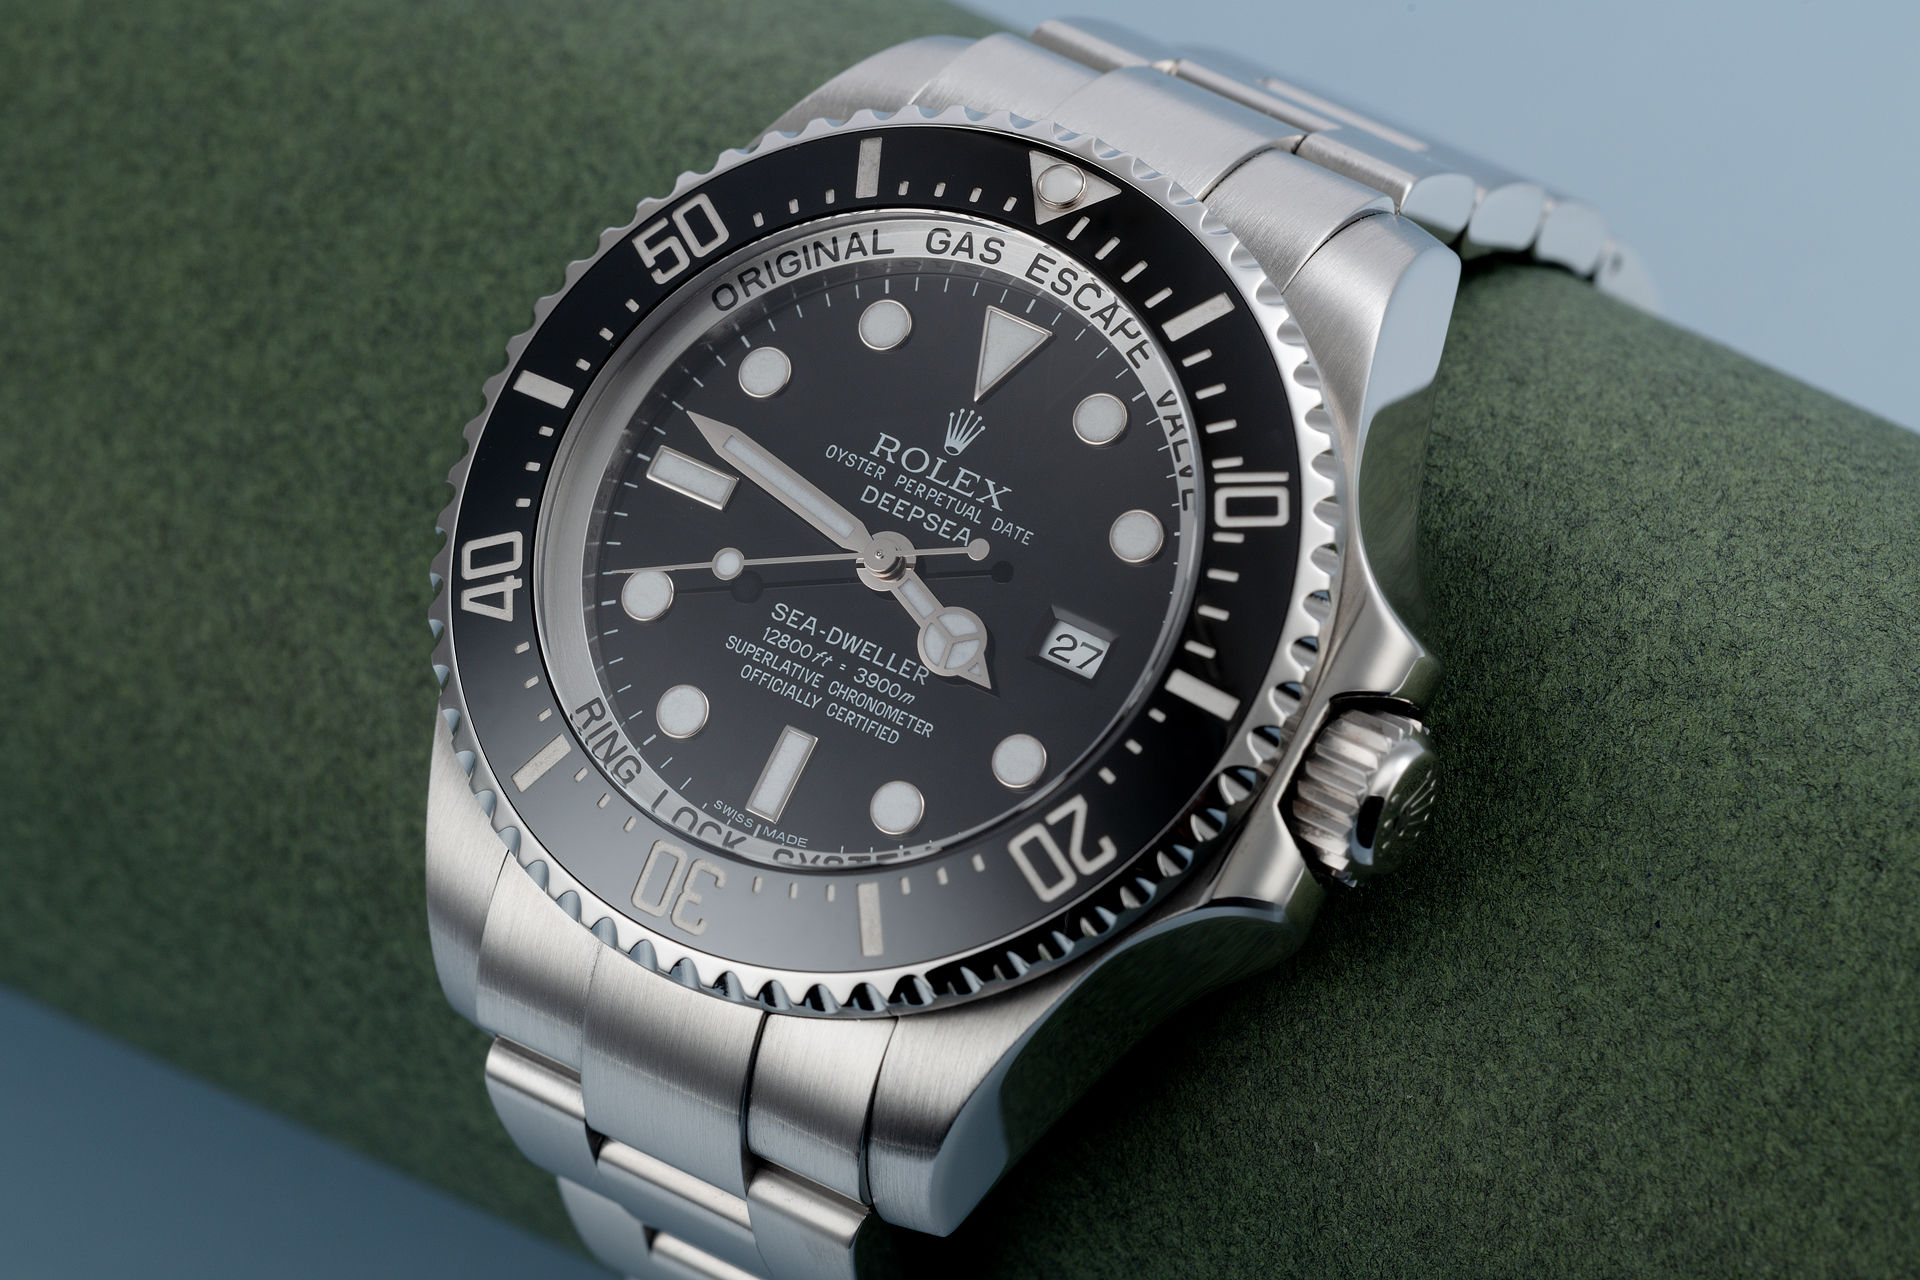 ref 116660 | Box & Certificate | Rolex Sea-Dweller Deepsea